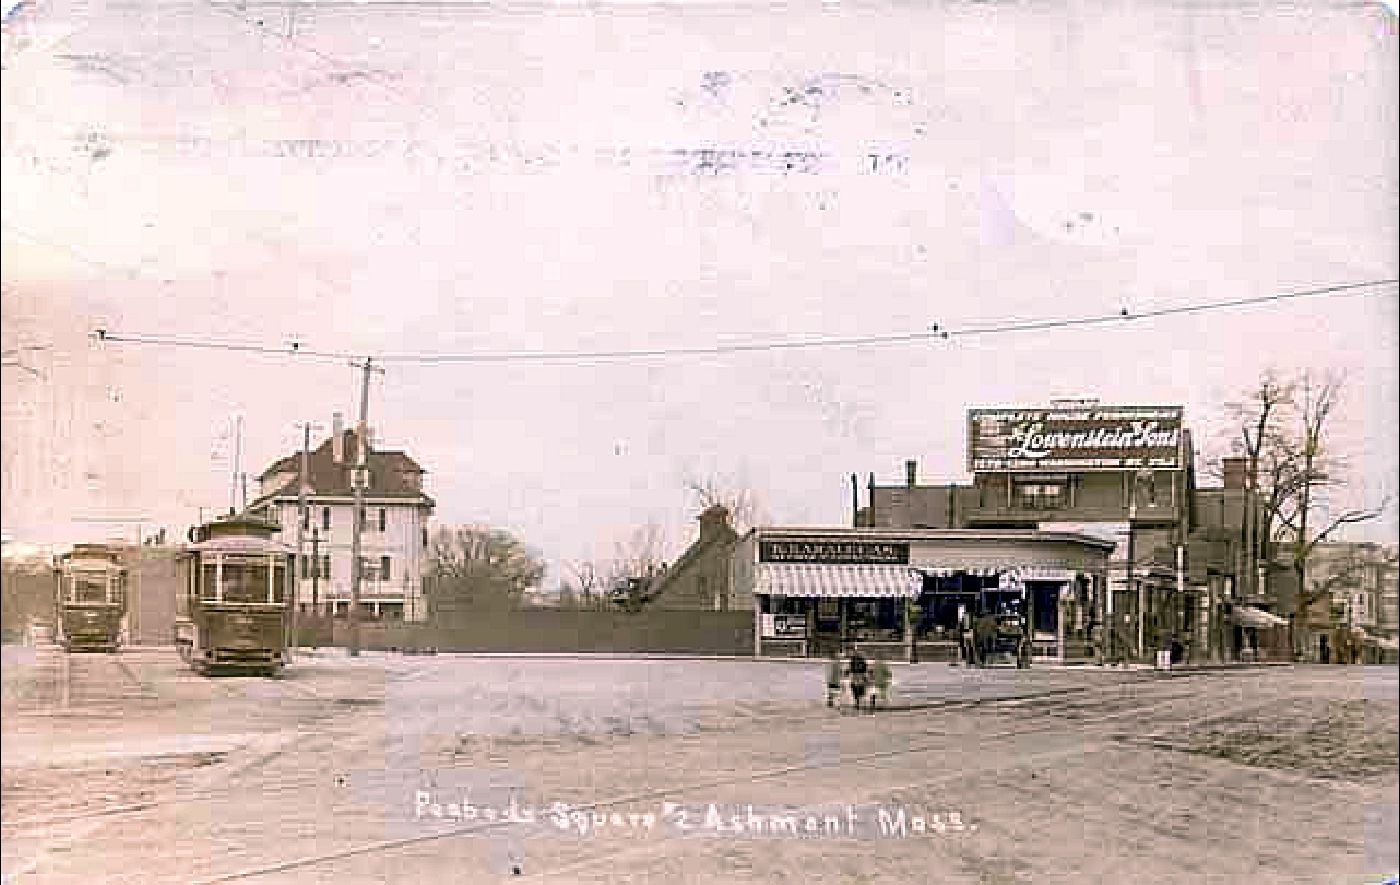  Peabody Square, Ashmont, Mass. Real photo ca. 1910-13.